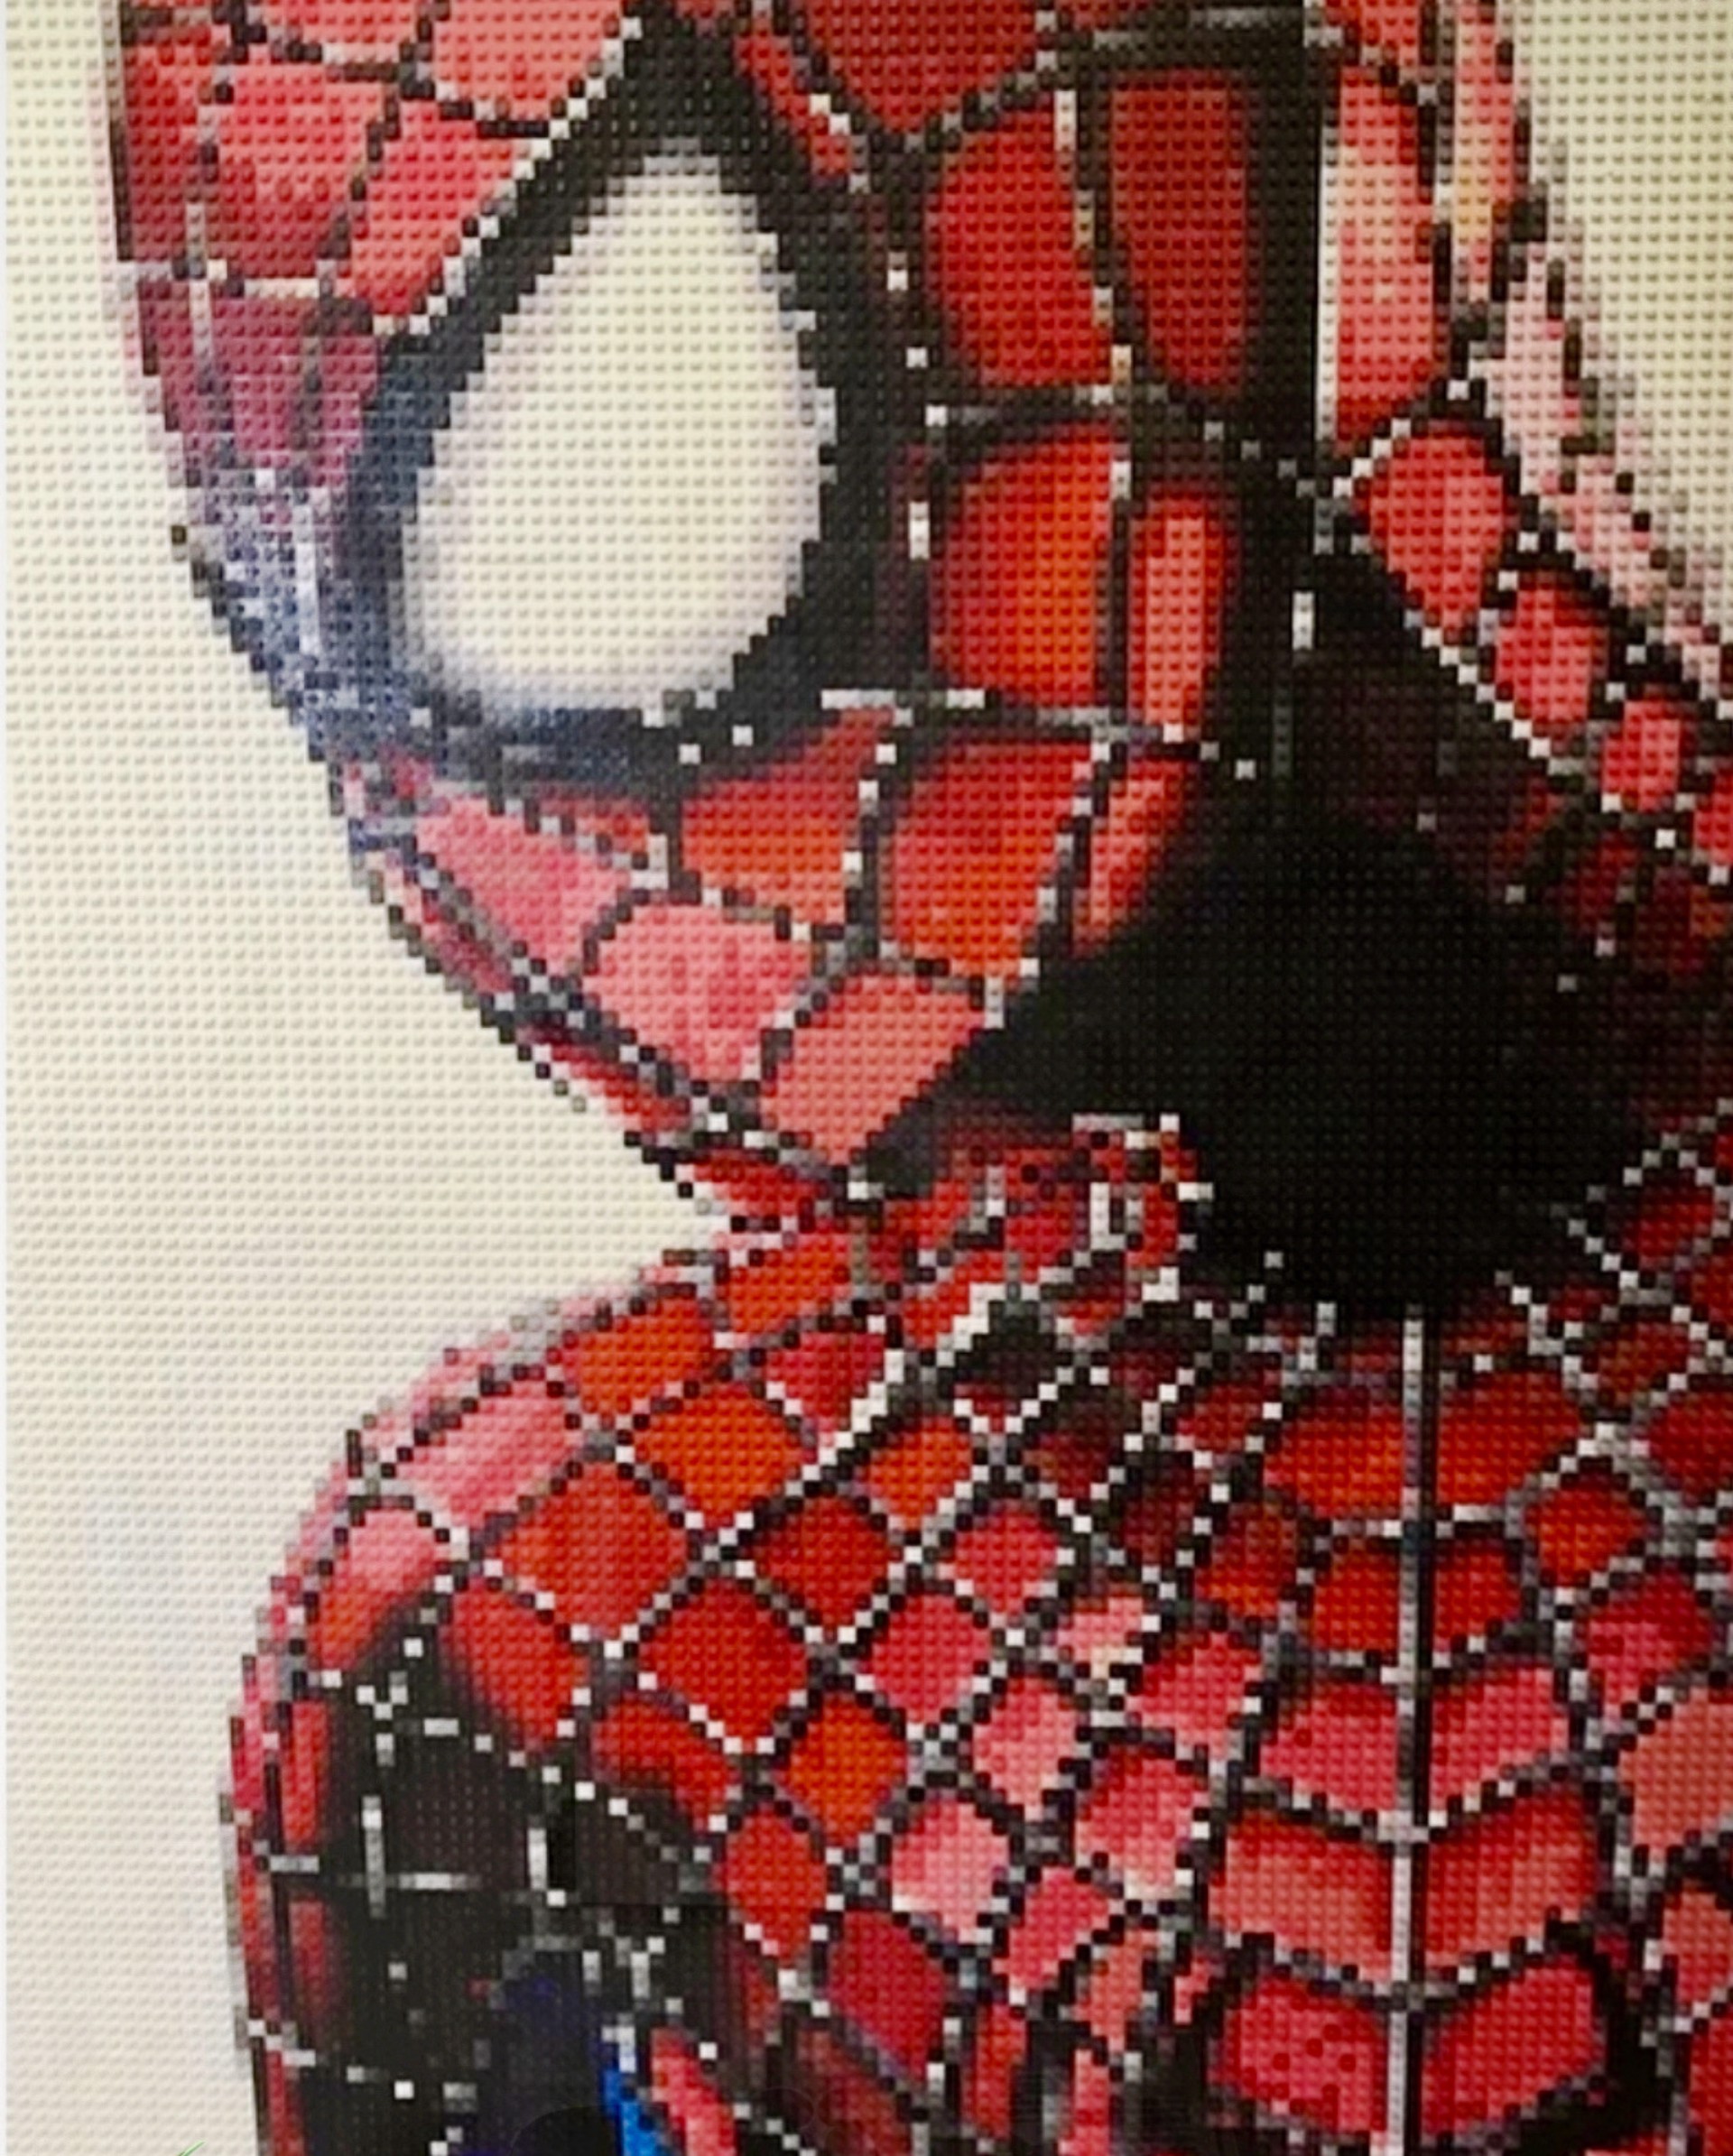 Spiderman by Joseph Kraham